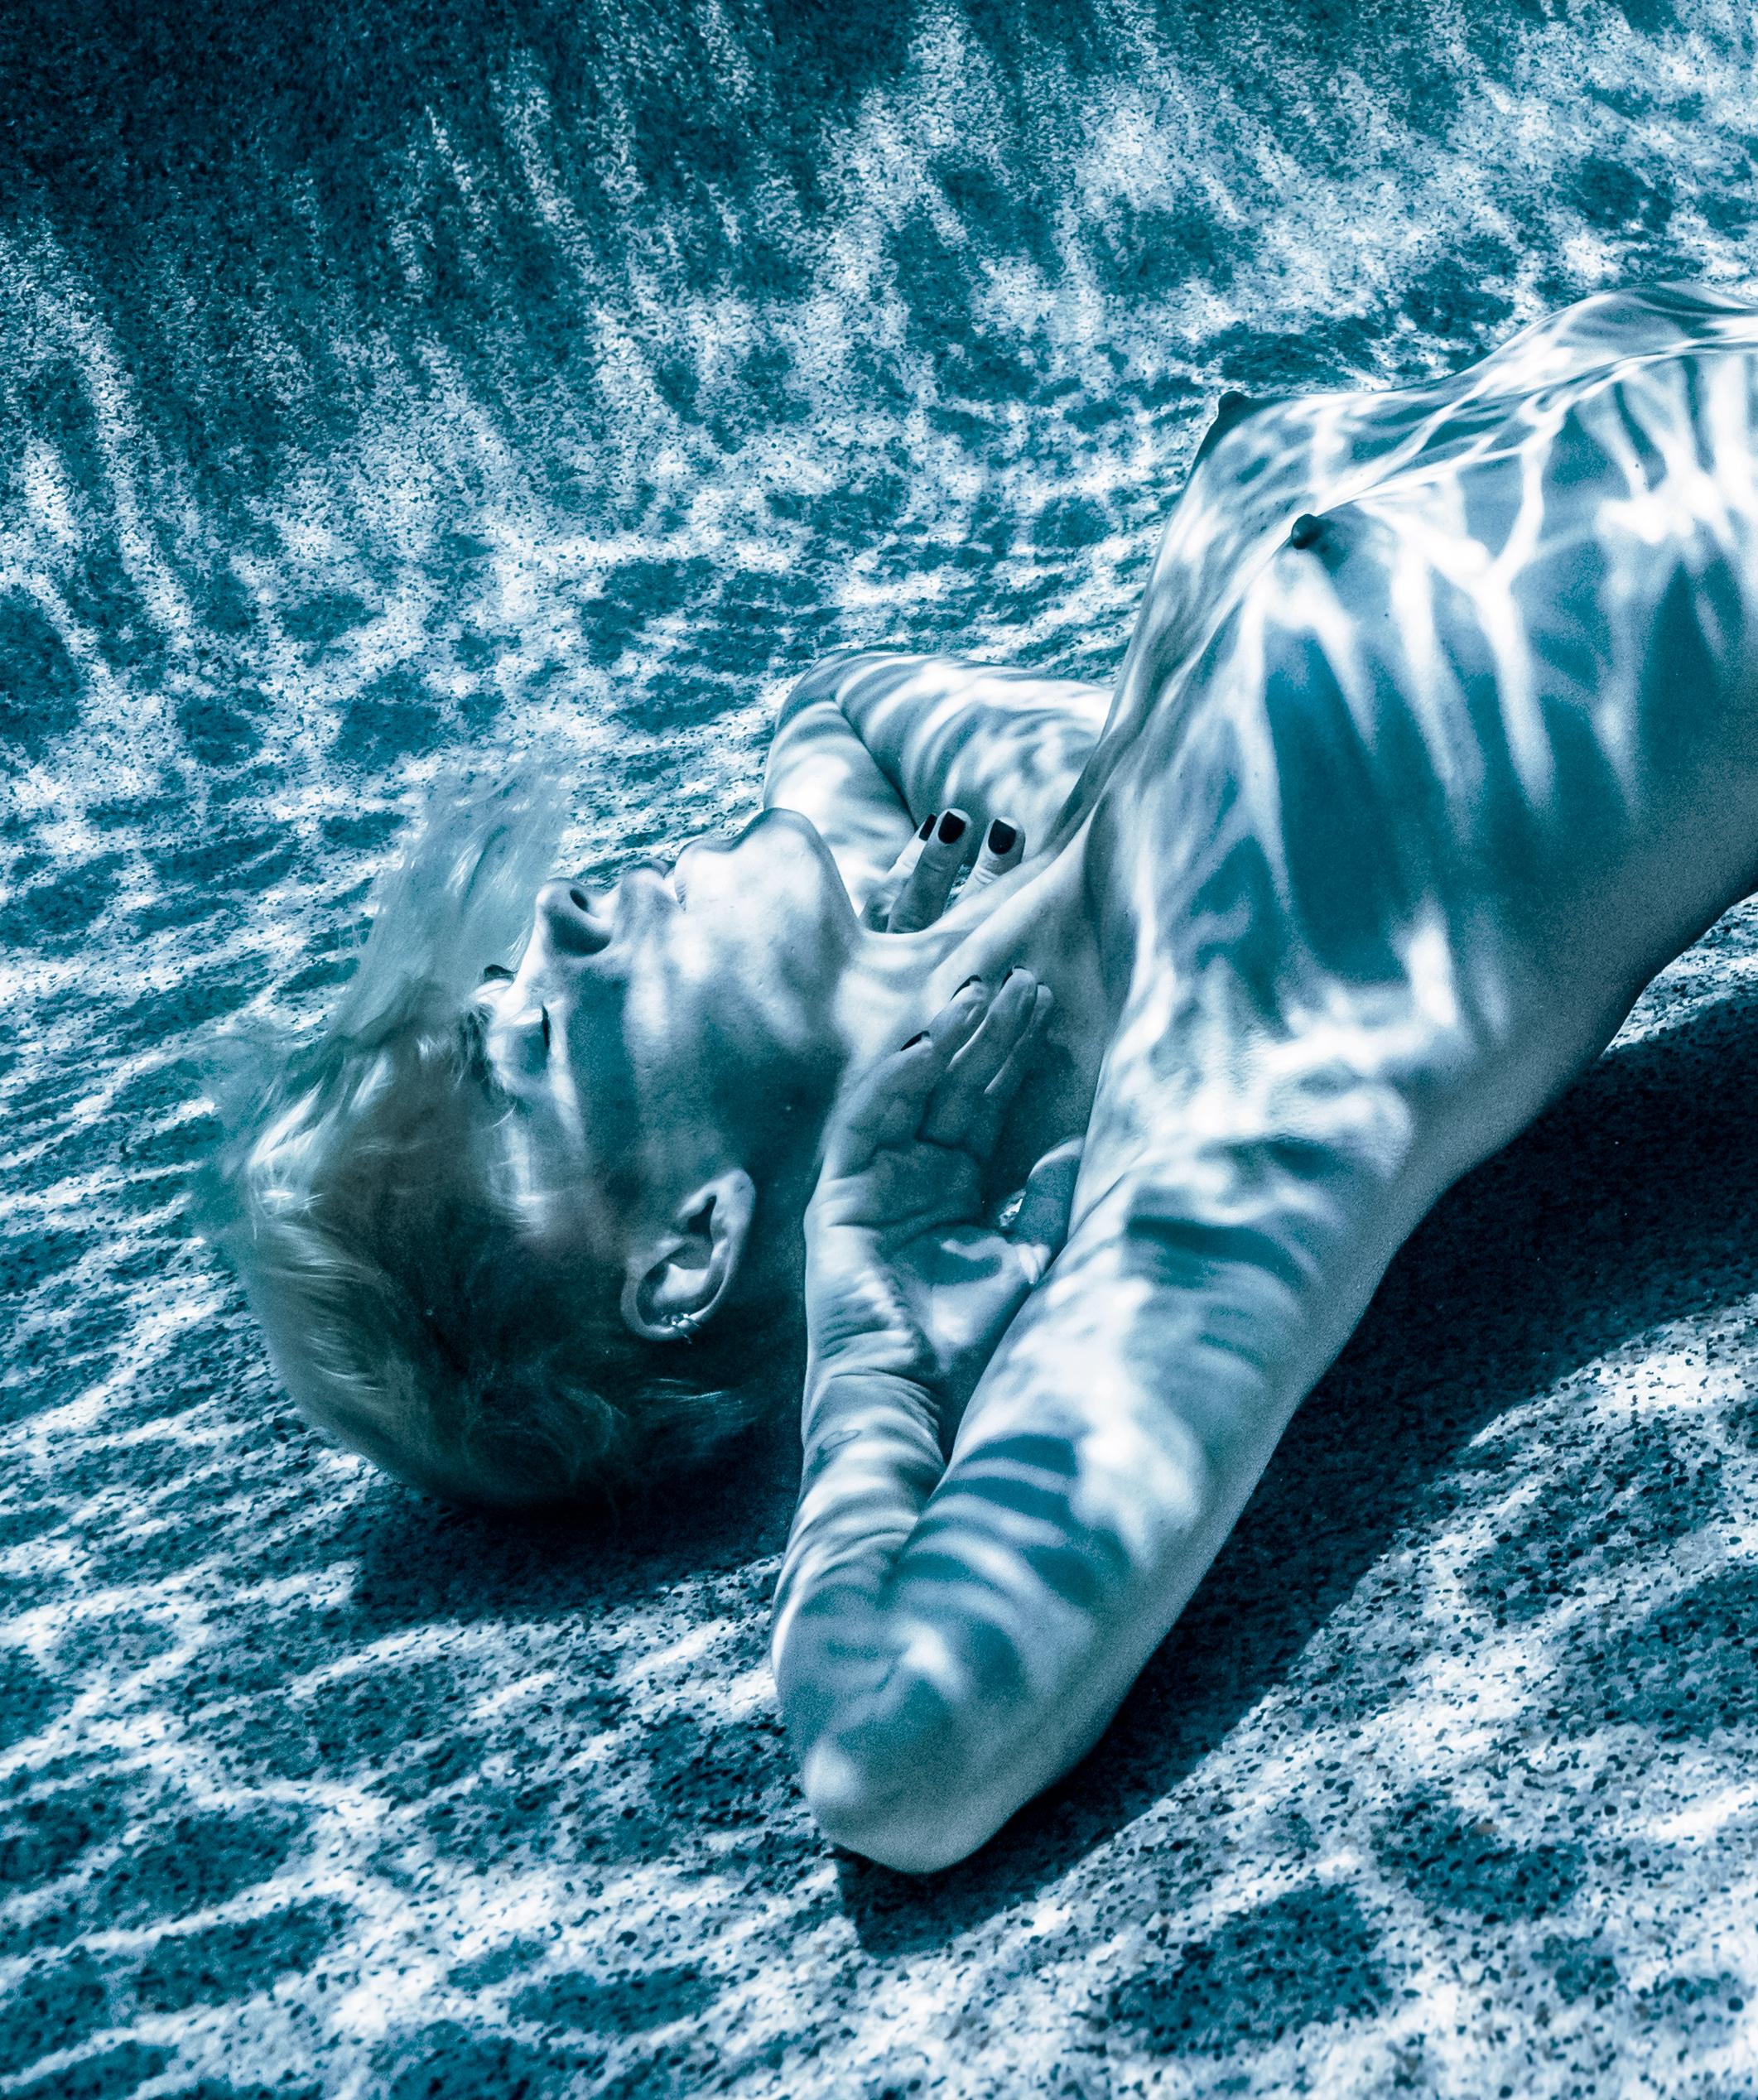 Moonlight - underwater nude photograph - archival pigment print 35x47